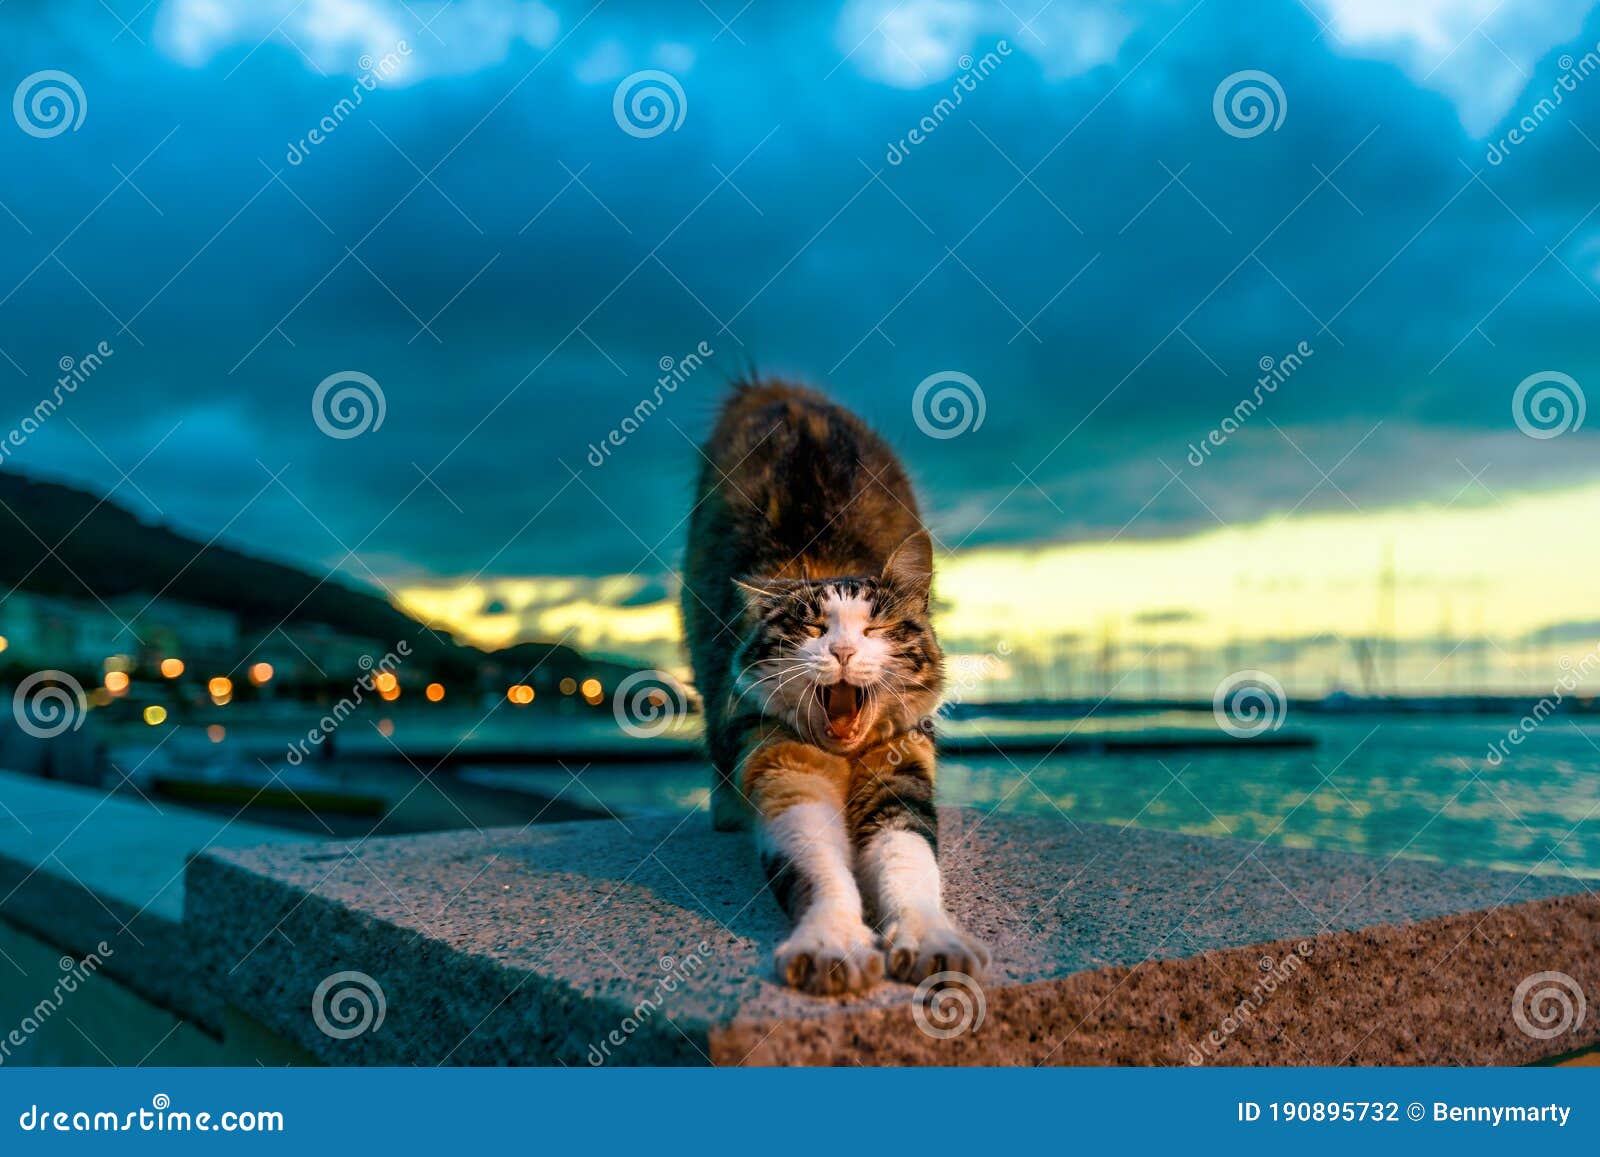 cat stretching in marciana marina at night